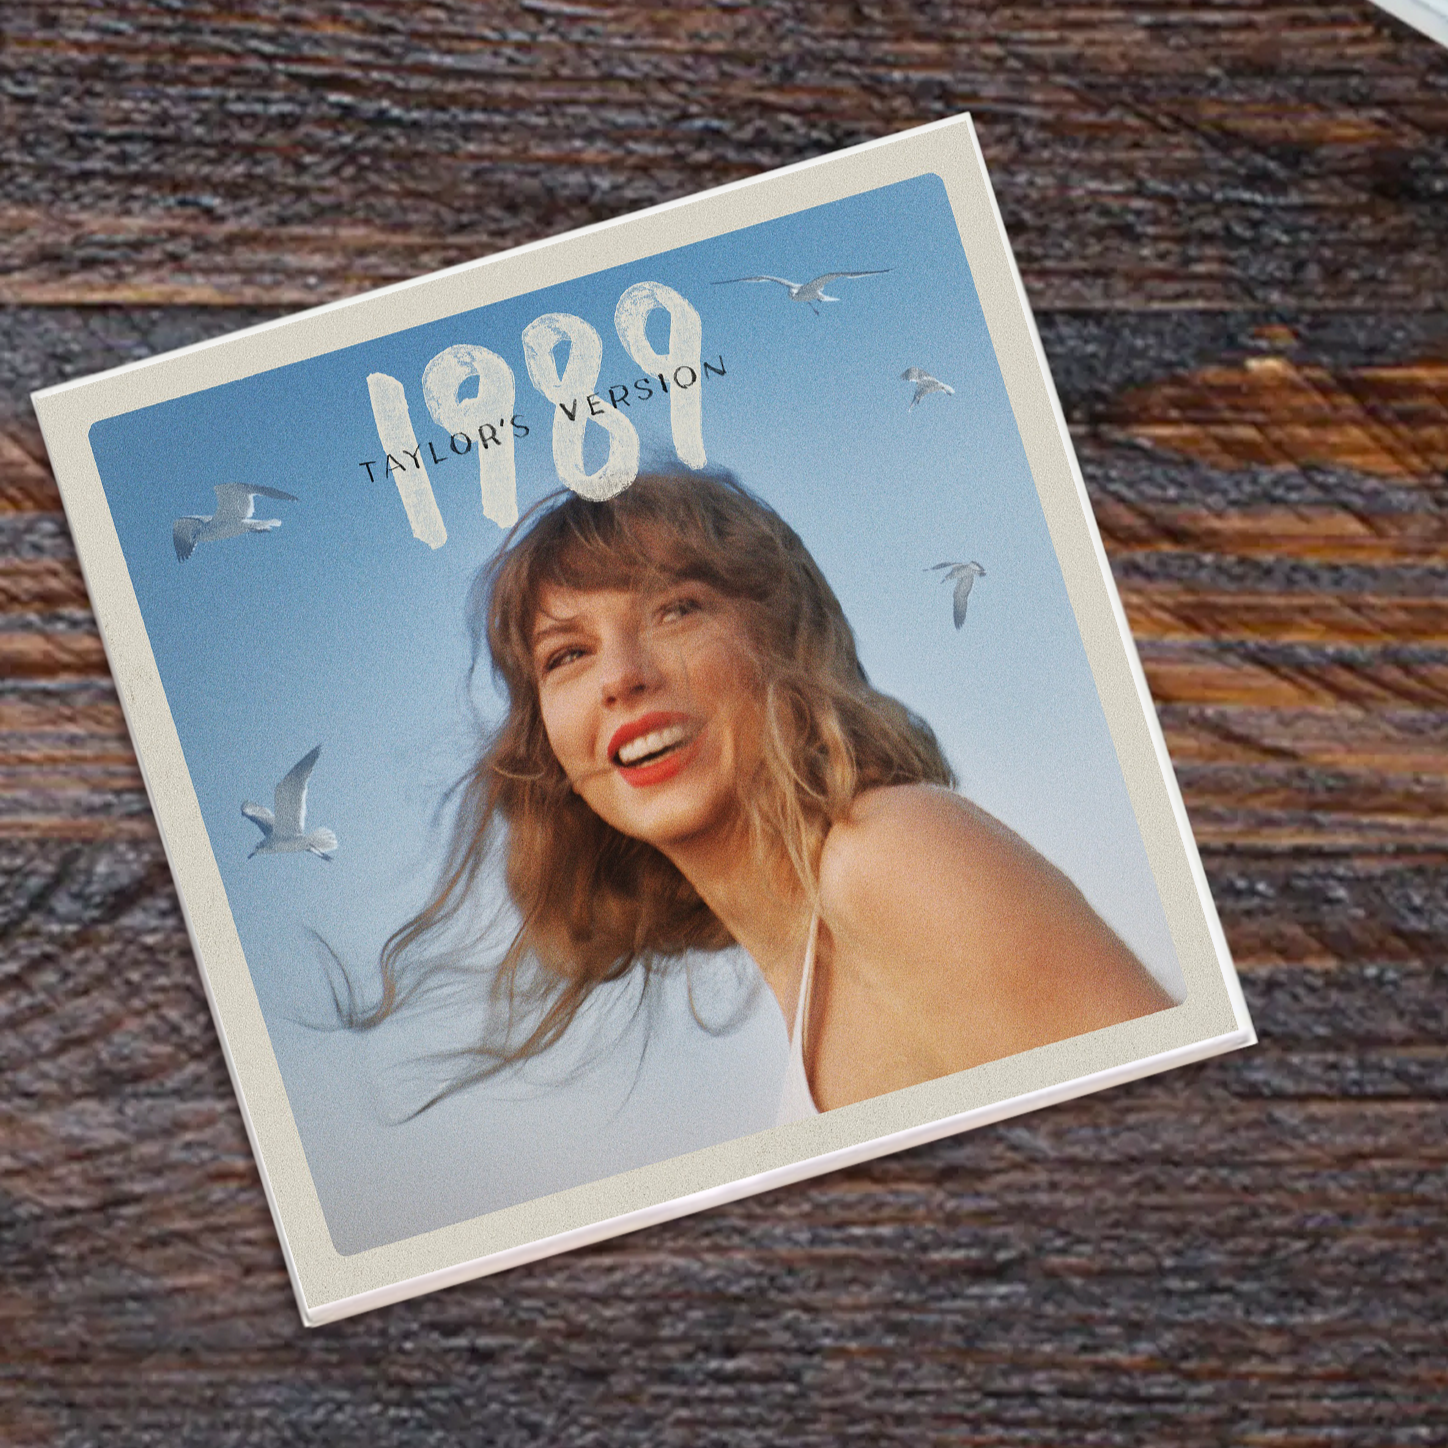 1989 (Taylor's Version) Digital Album